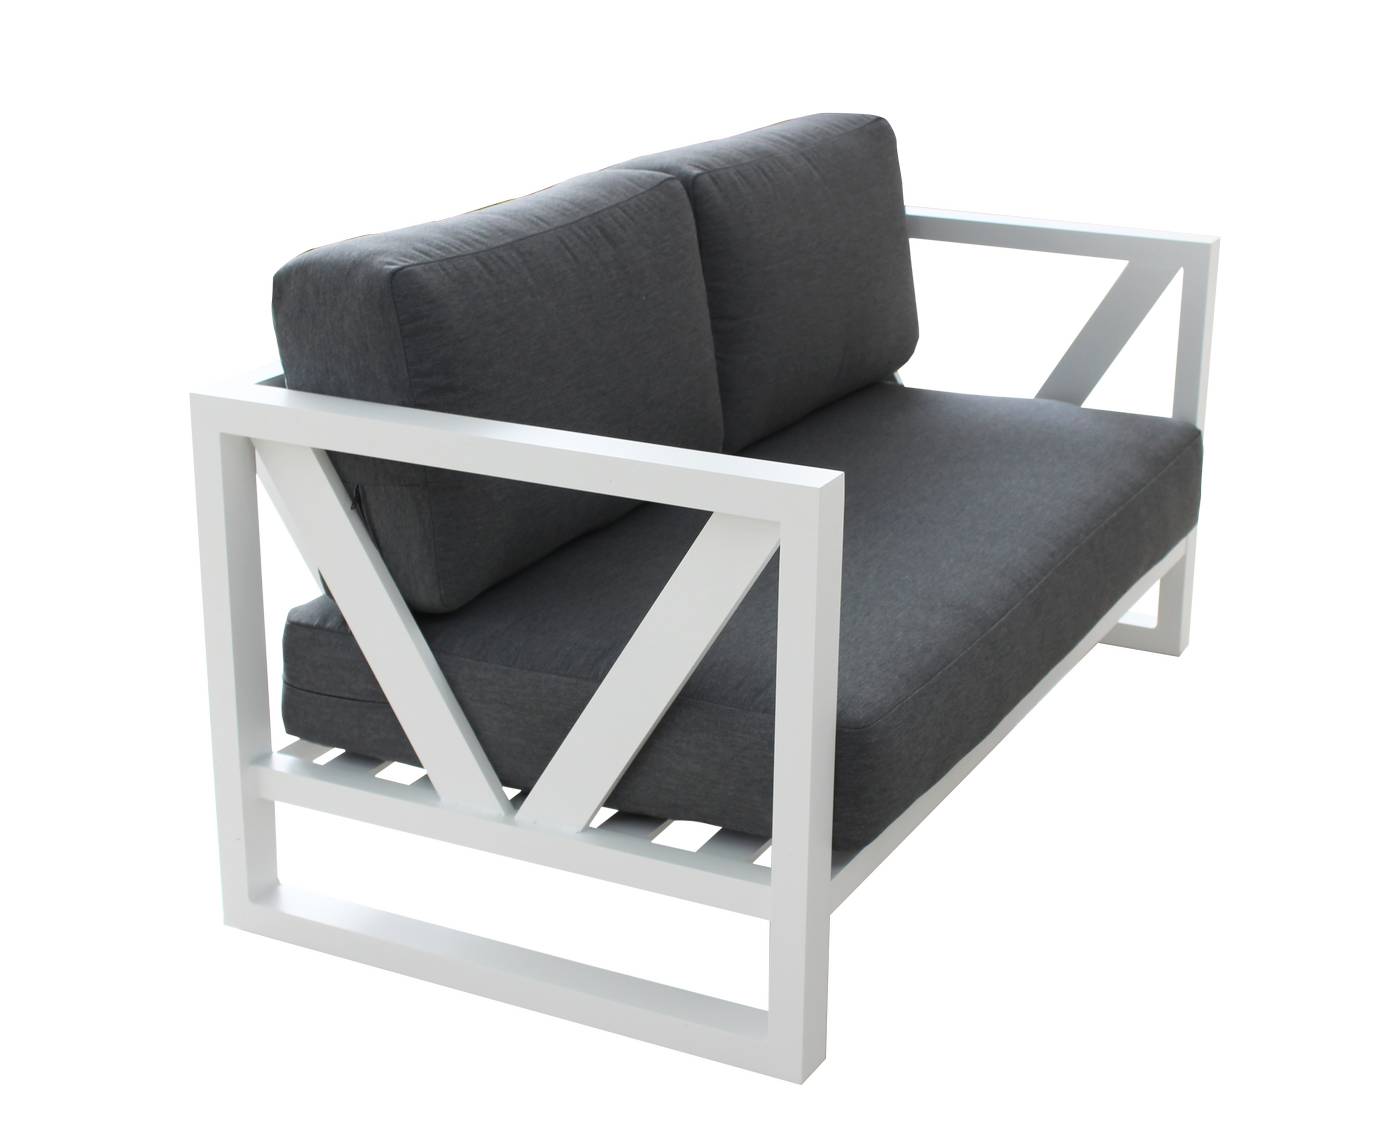 Lujoso sofá de 2 plazas con cojines  desenfundables. Robusta estructura aluminio color blanco, antracita, champagne, plata o marrón.